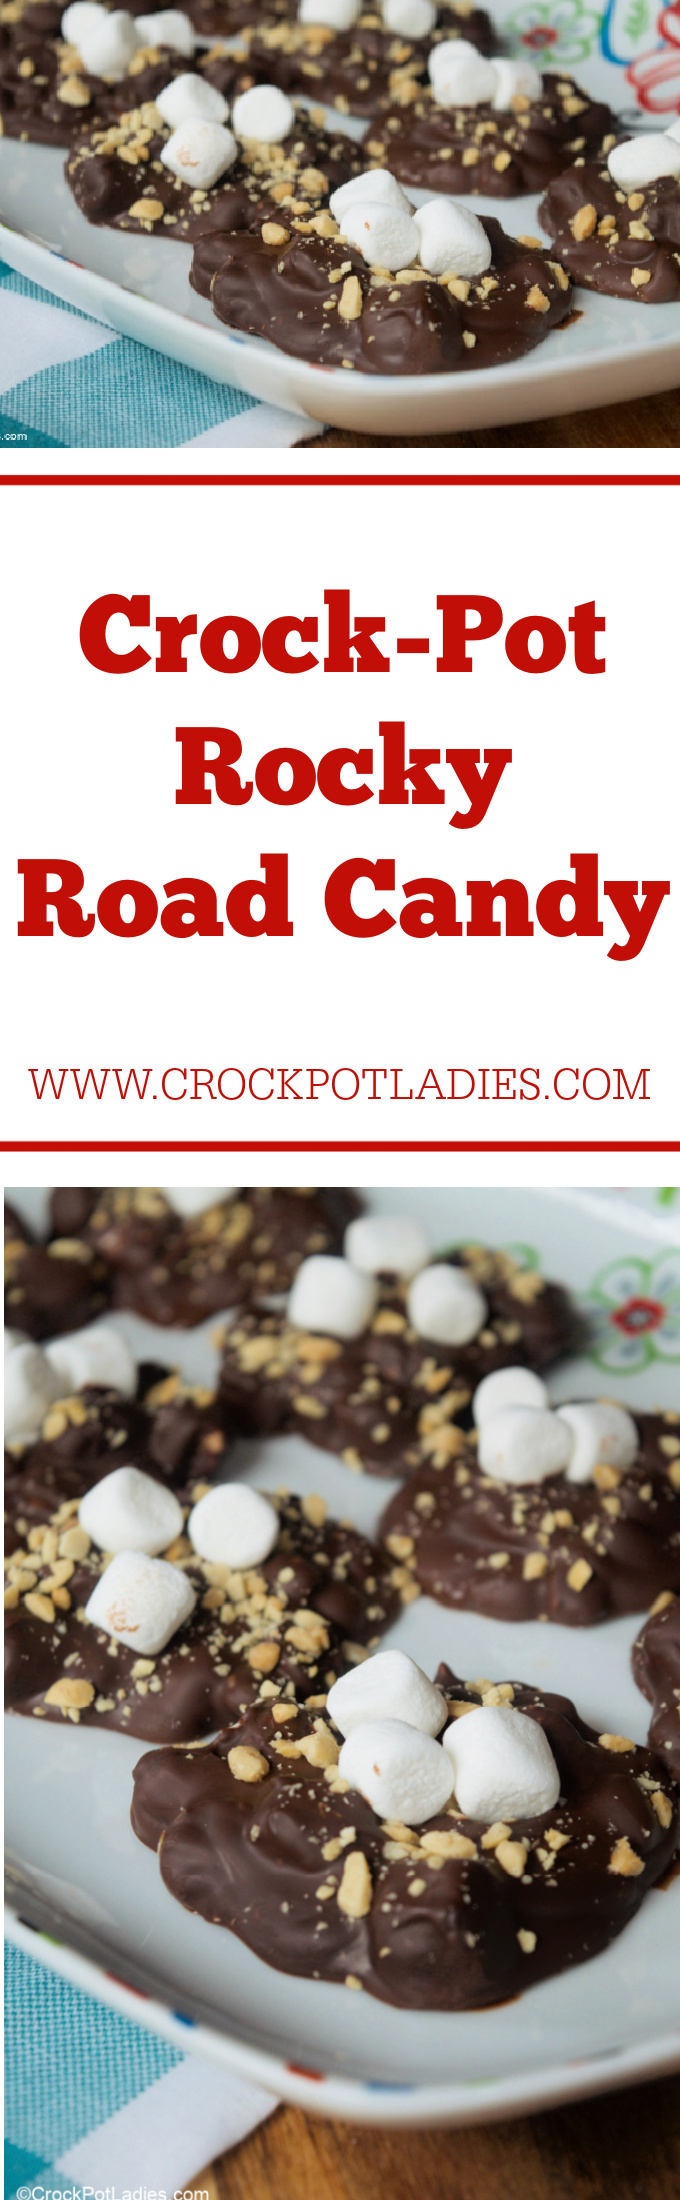 Crock-Pot Rocky Road Candy